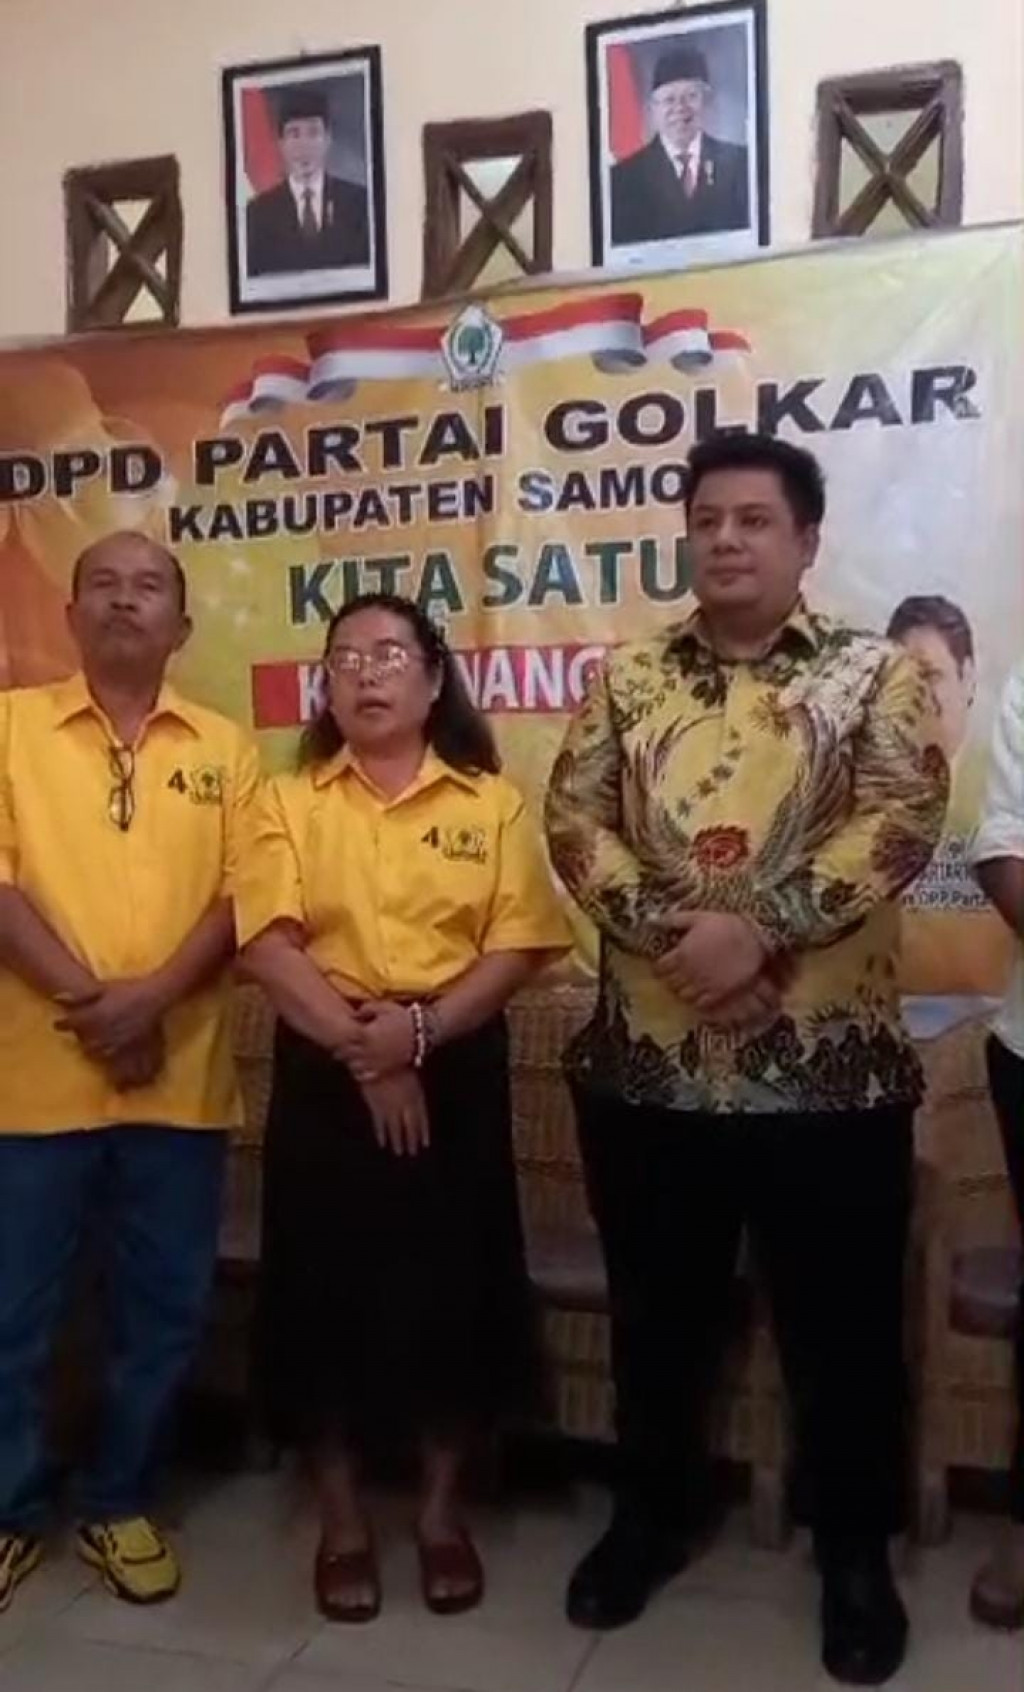 Vandiko Timoteus Gultom Resmi Daftarkan Diri Sebagai Calon Bupati dari Partai Golkar di Samosir